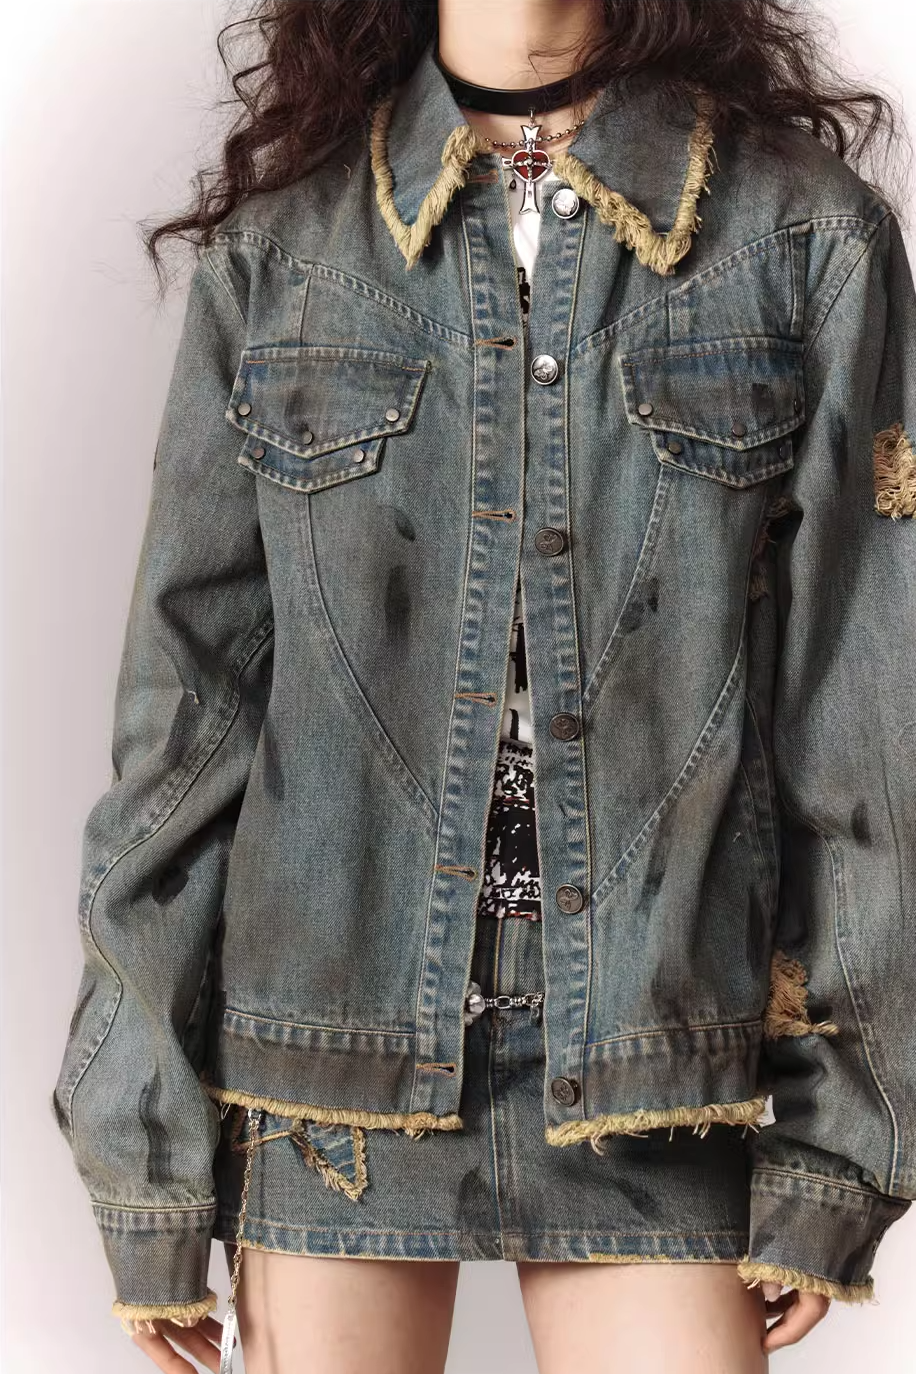 Denim jacket tops & short skirt KIN0105